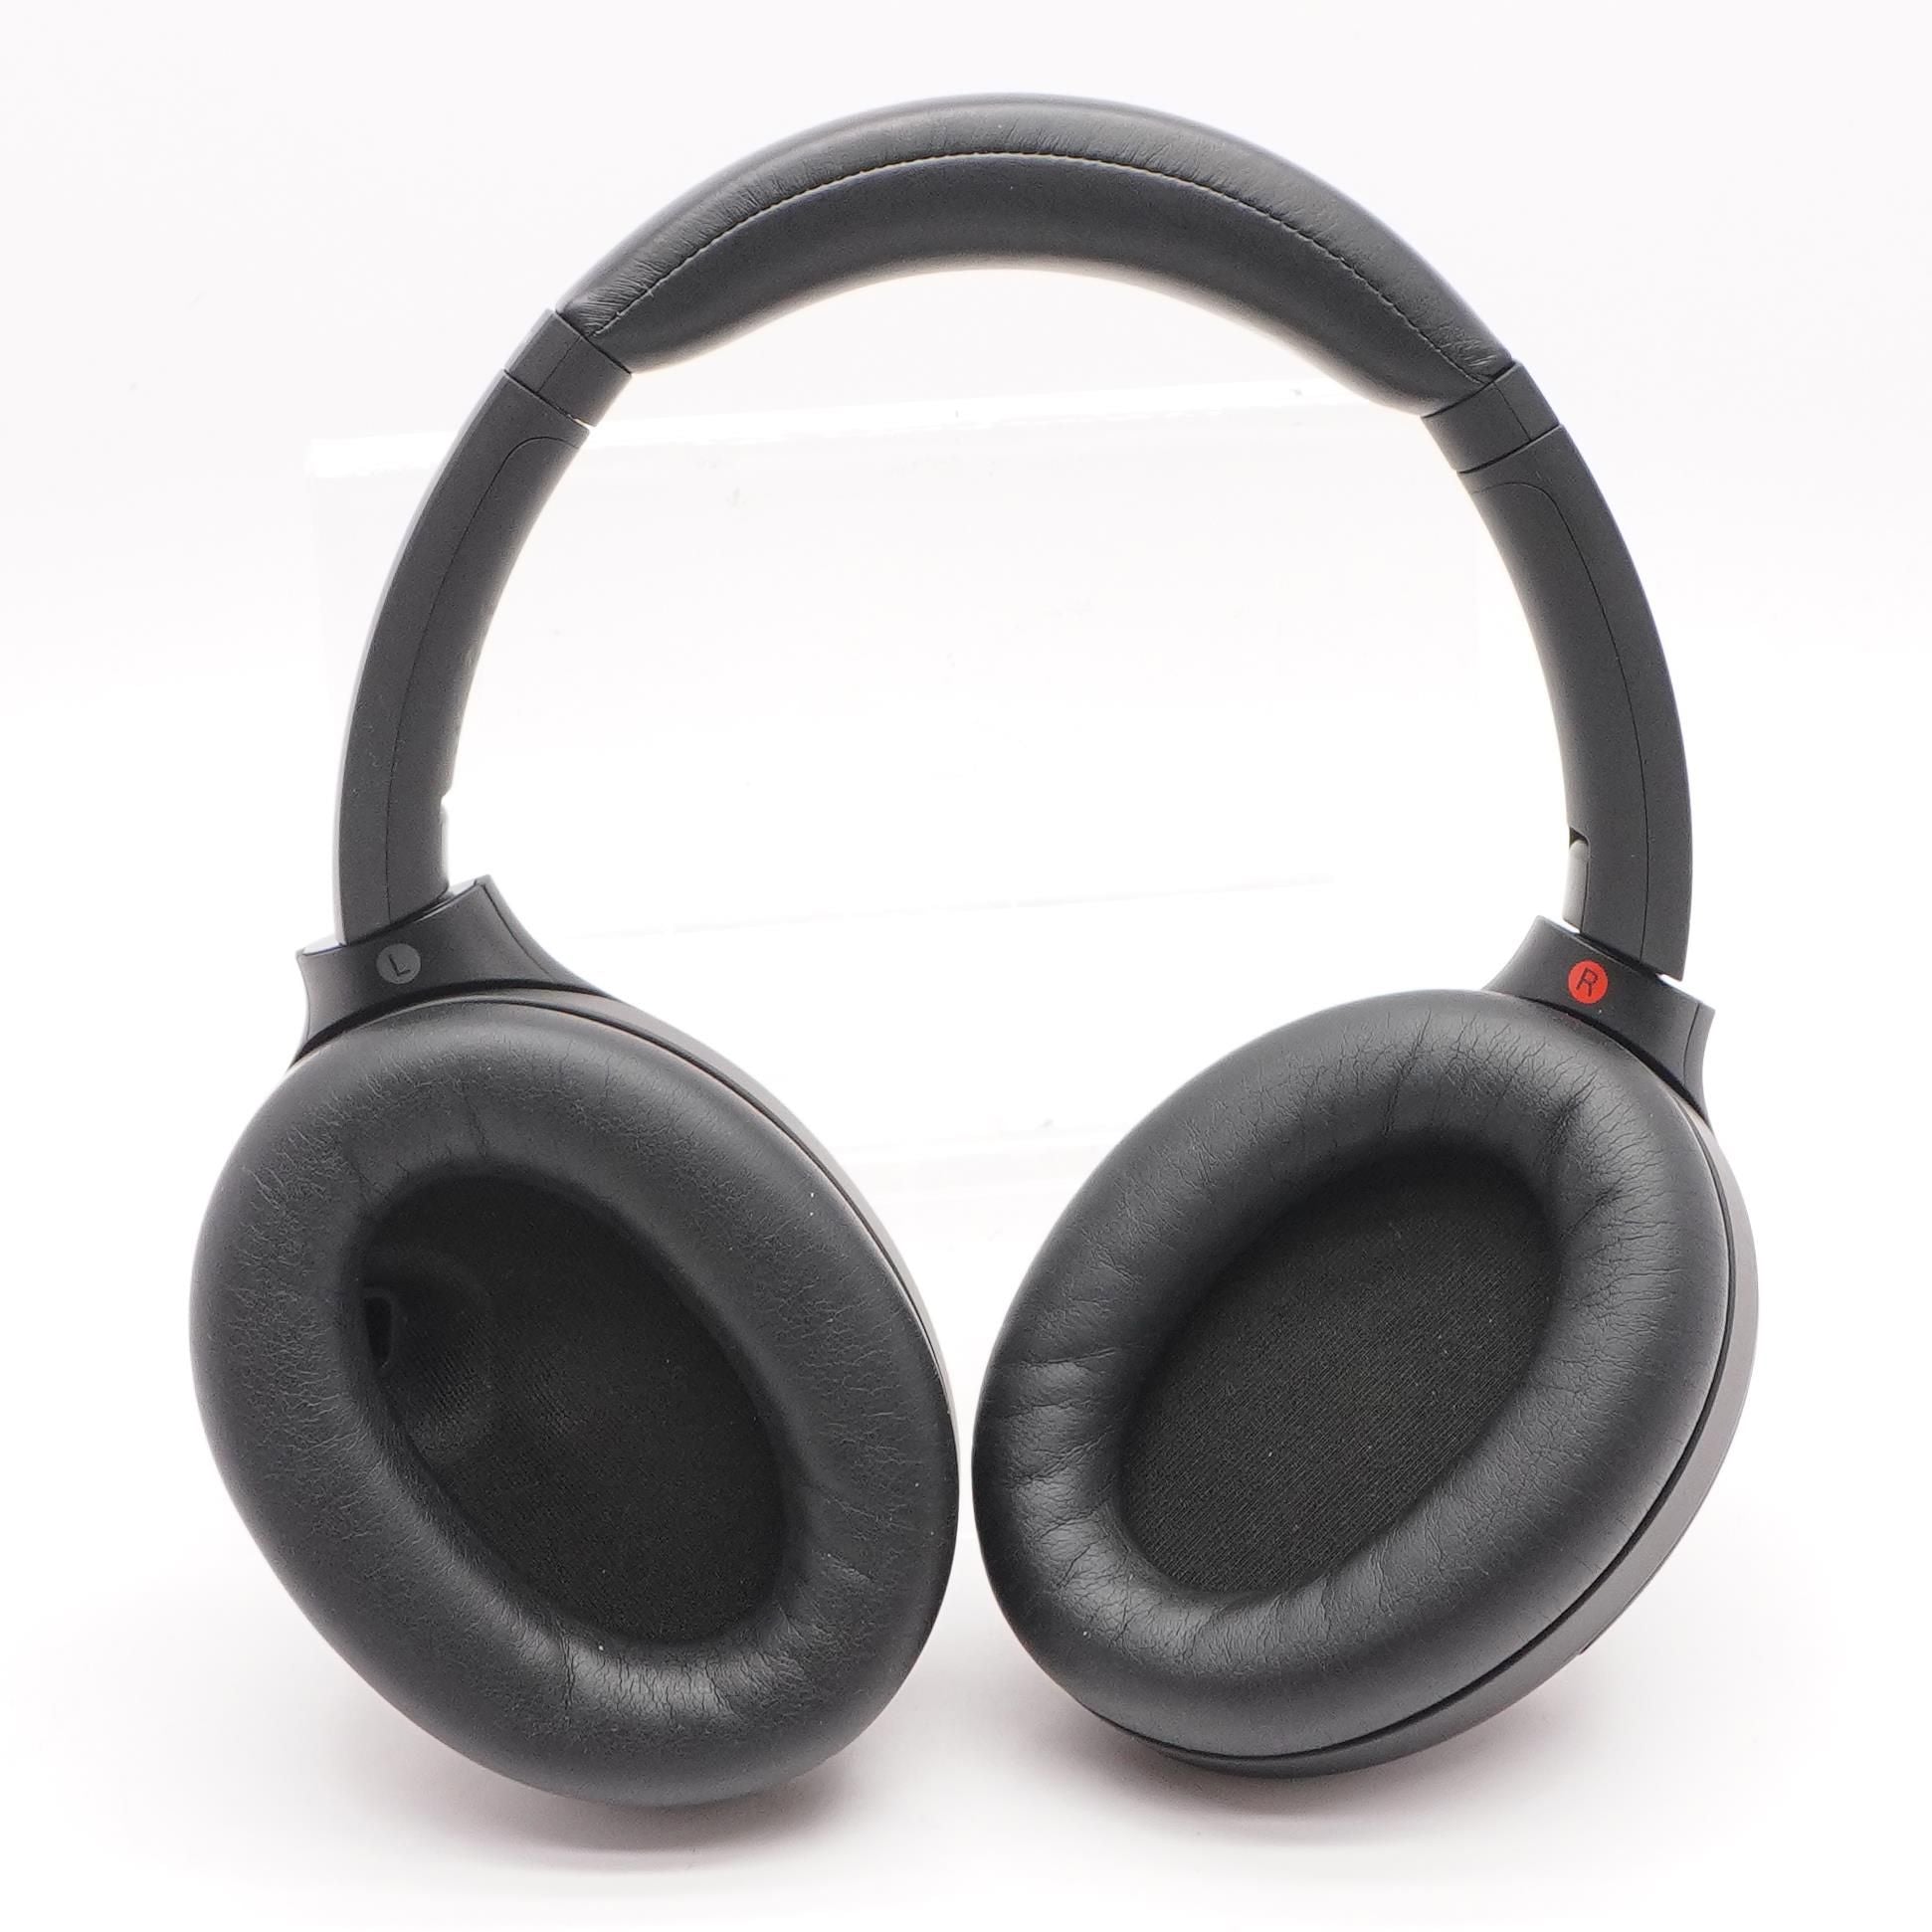 Black WH-1000XM4 Wireless Noise Cancelling Headphones